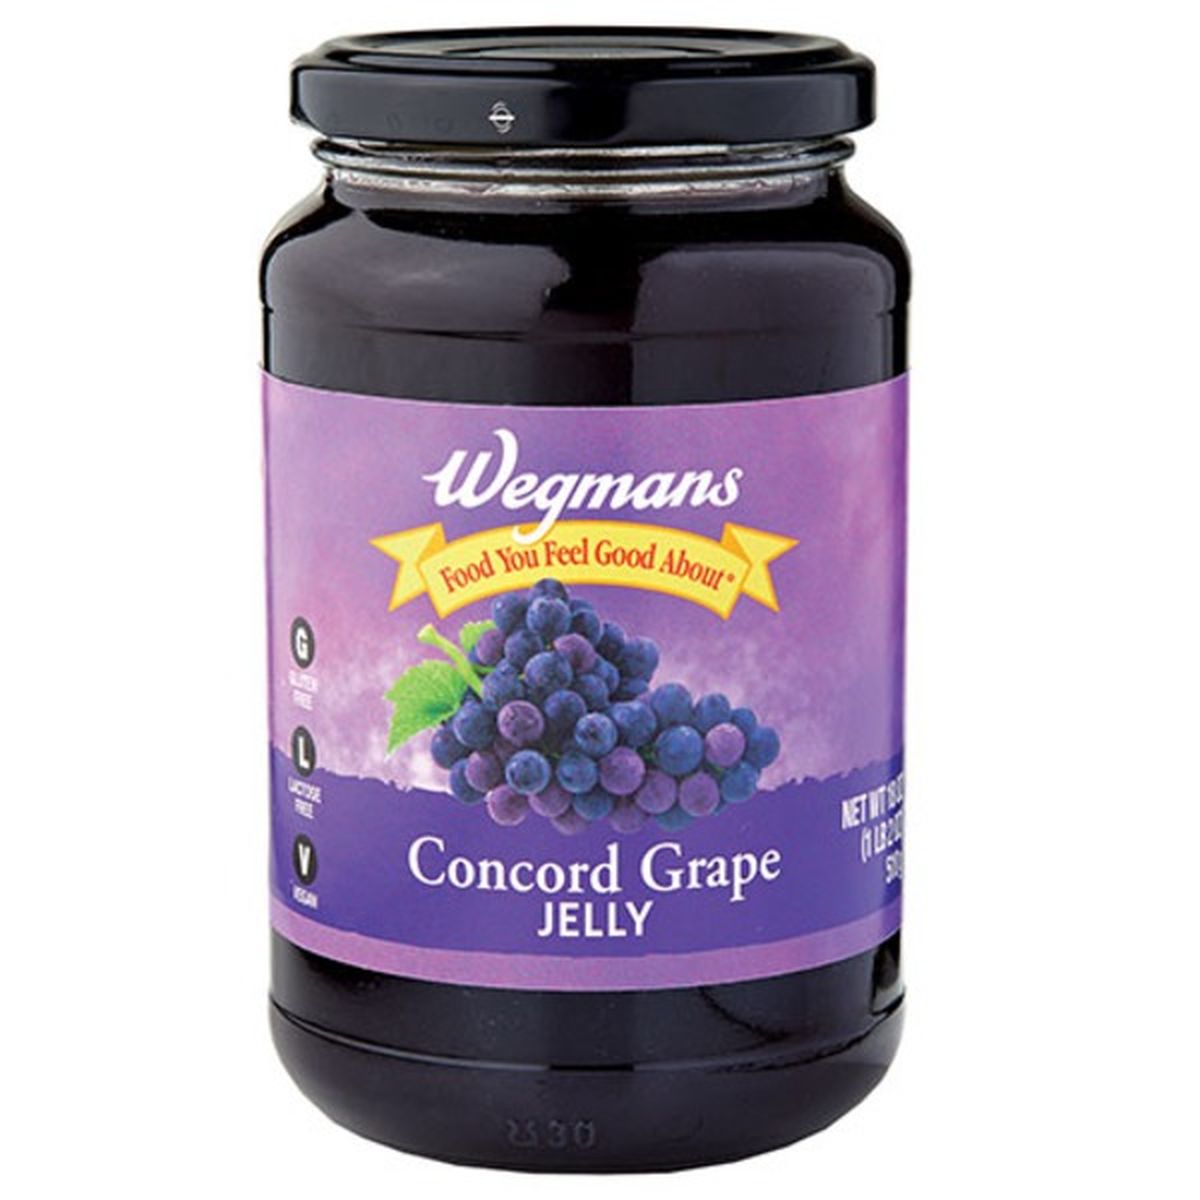 Calories in Wegmans Concord Grape Jelly